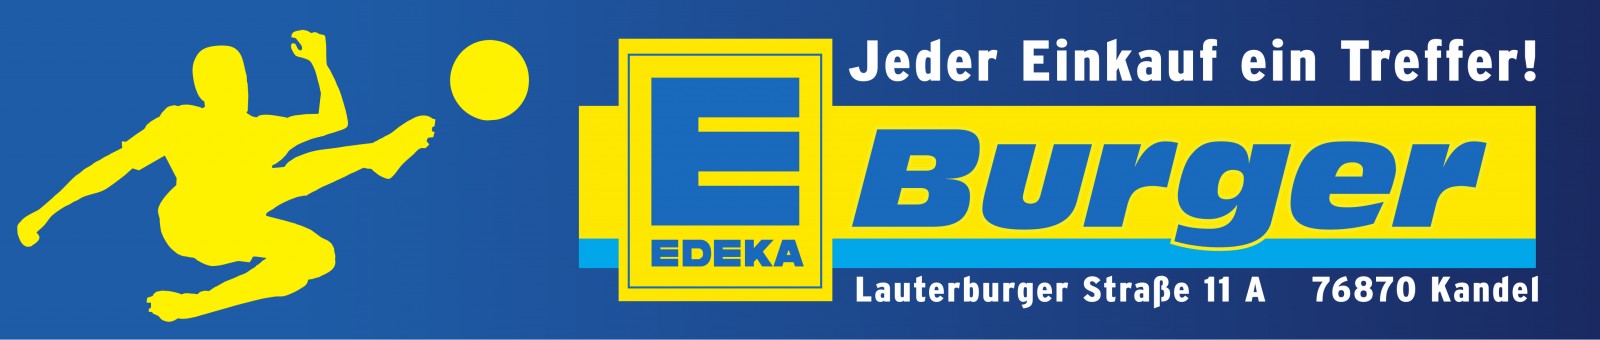 Edeka Burger